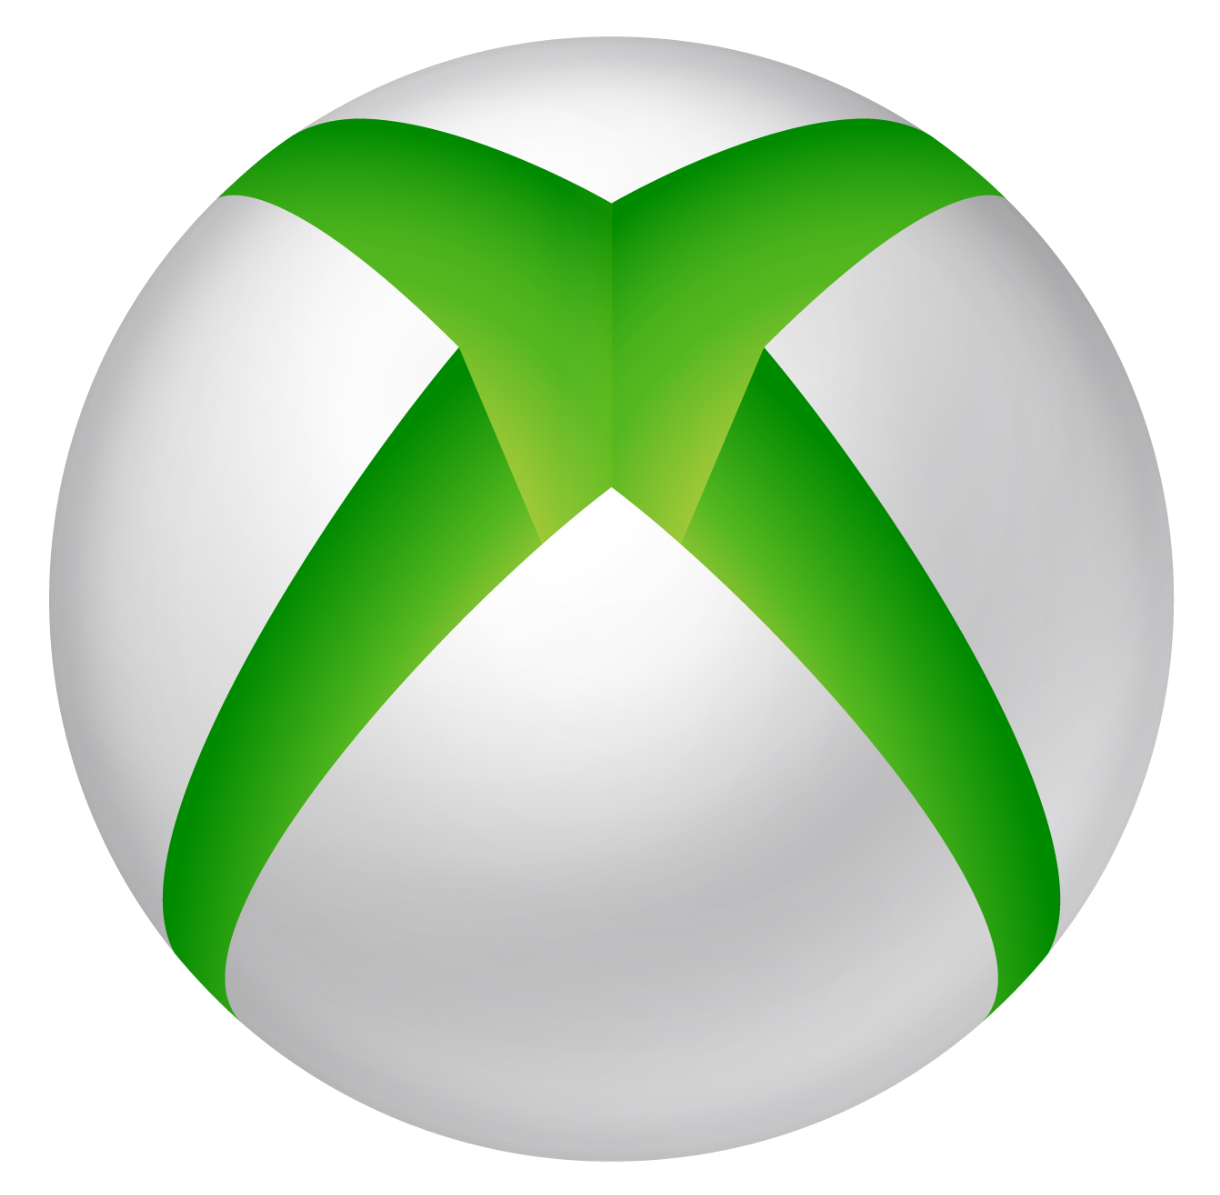 Xbox Image PNG Image